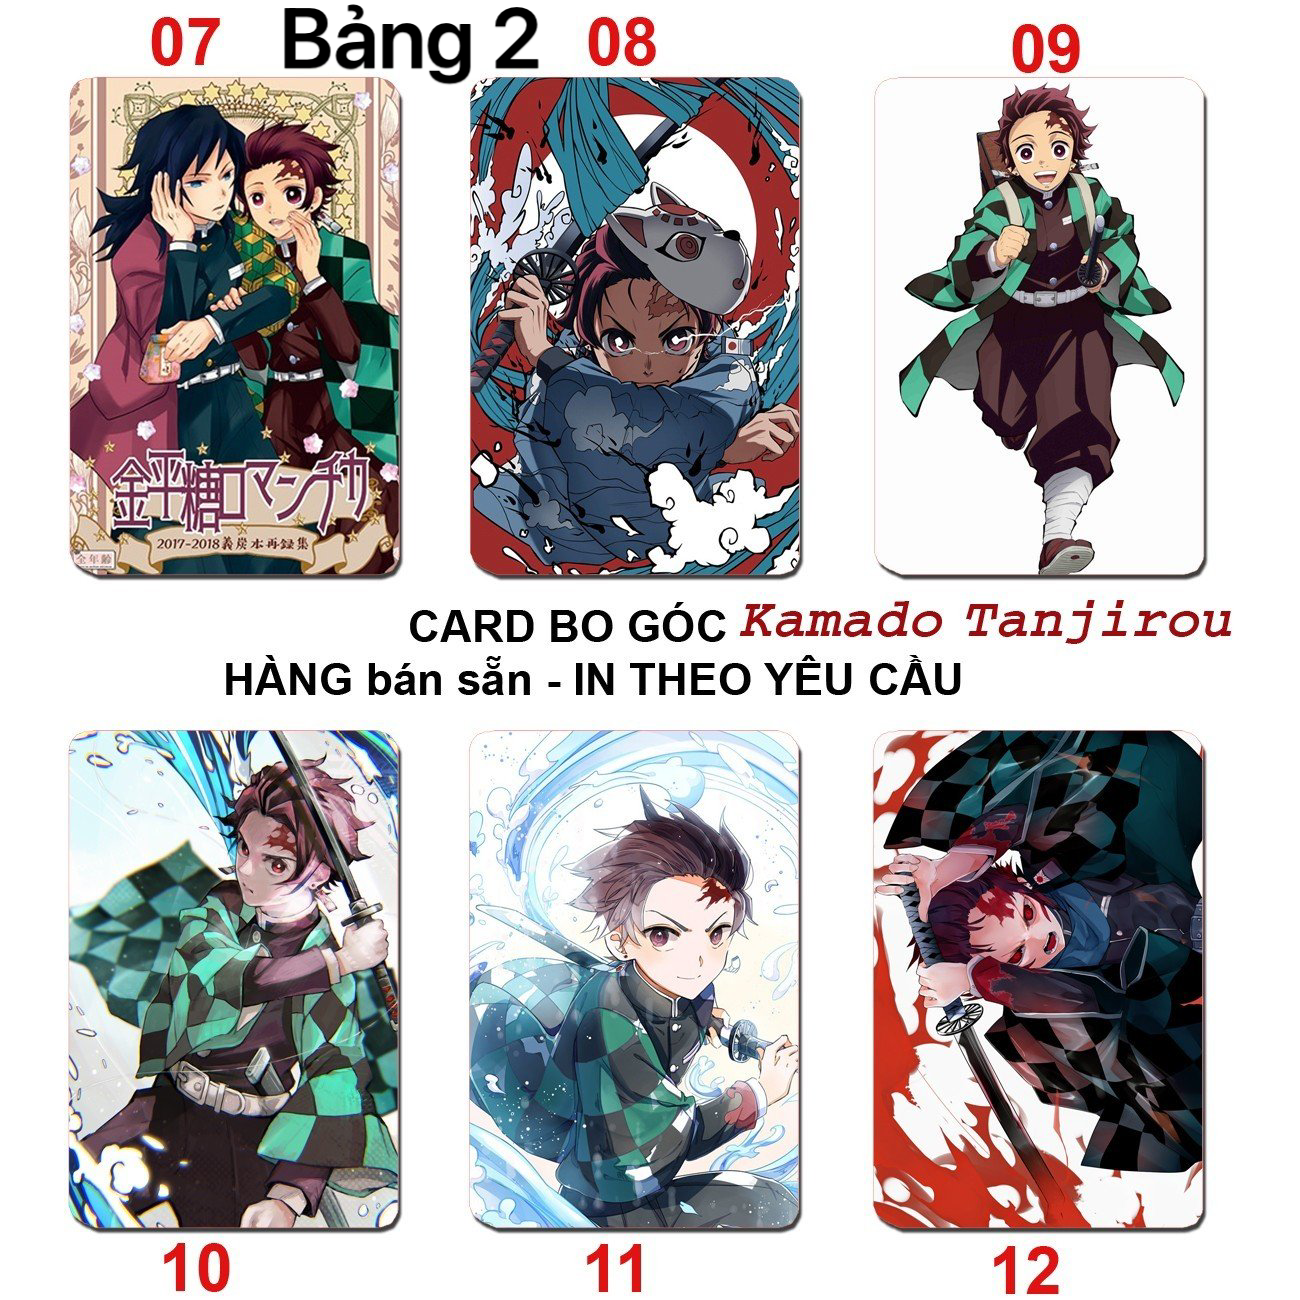 Ảnh card Tanjiro kamado 6 ảnh khác nhau/ Thẻ card hình kamado Taạniro anime kimetsu no yaiba